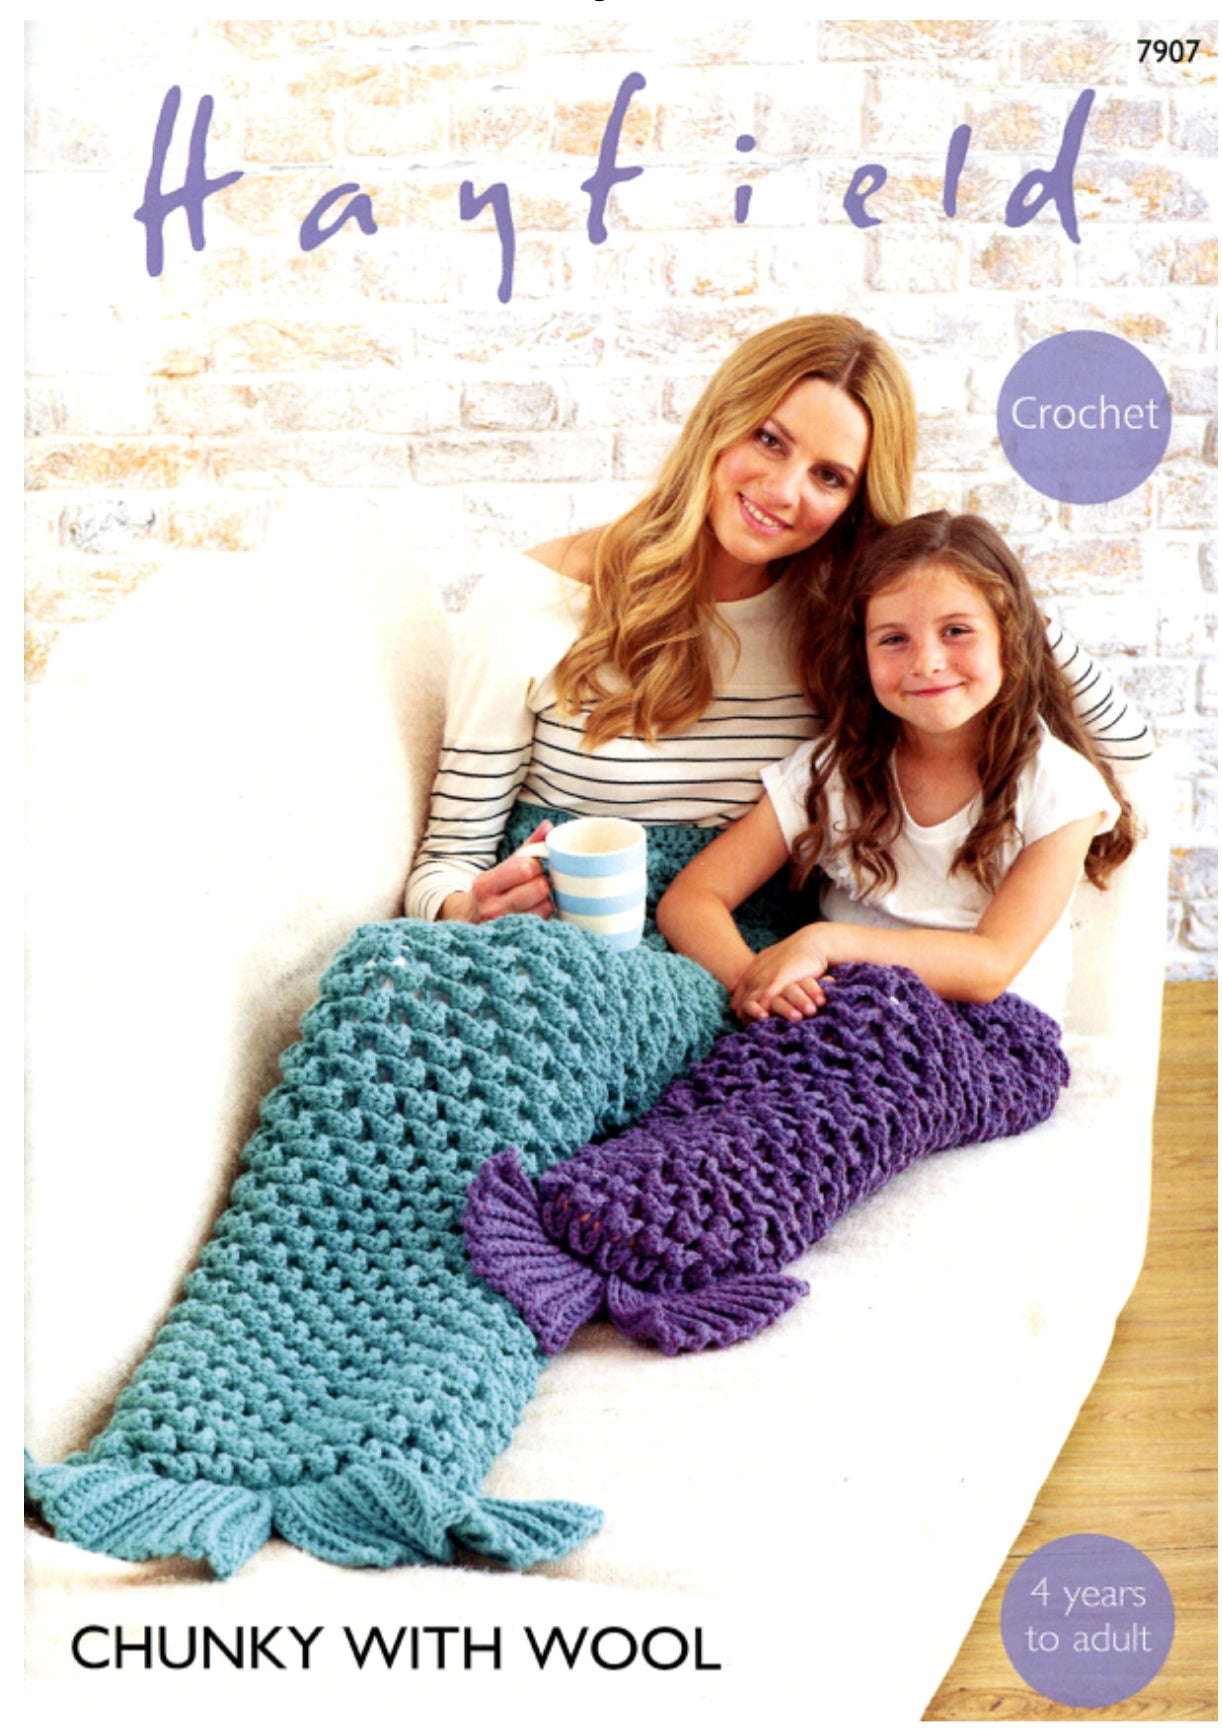 Sirdar 7907 Crochet Mermaid Tail in Chunky